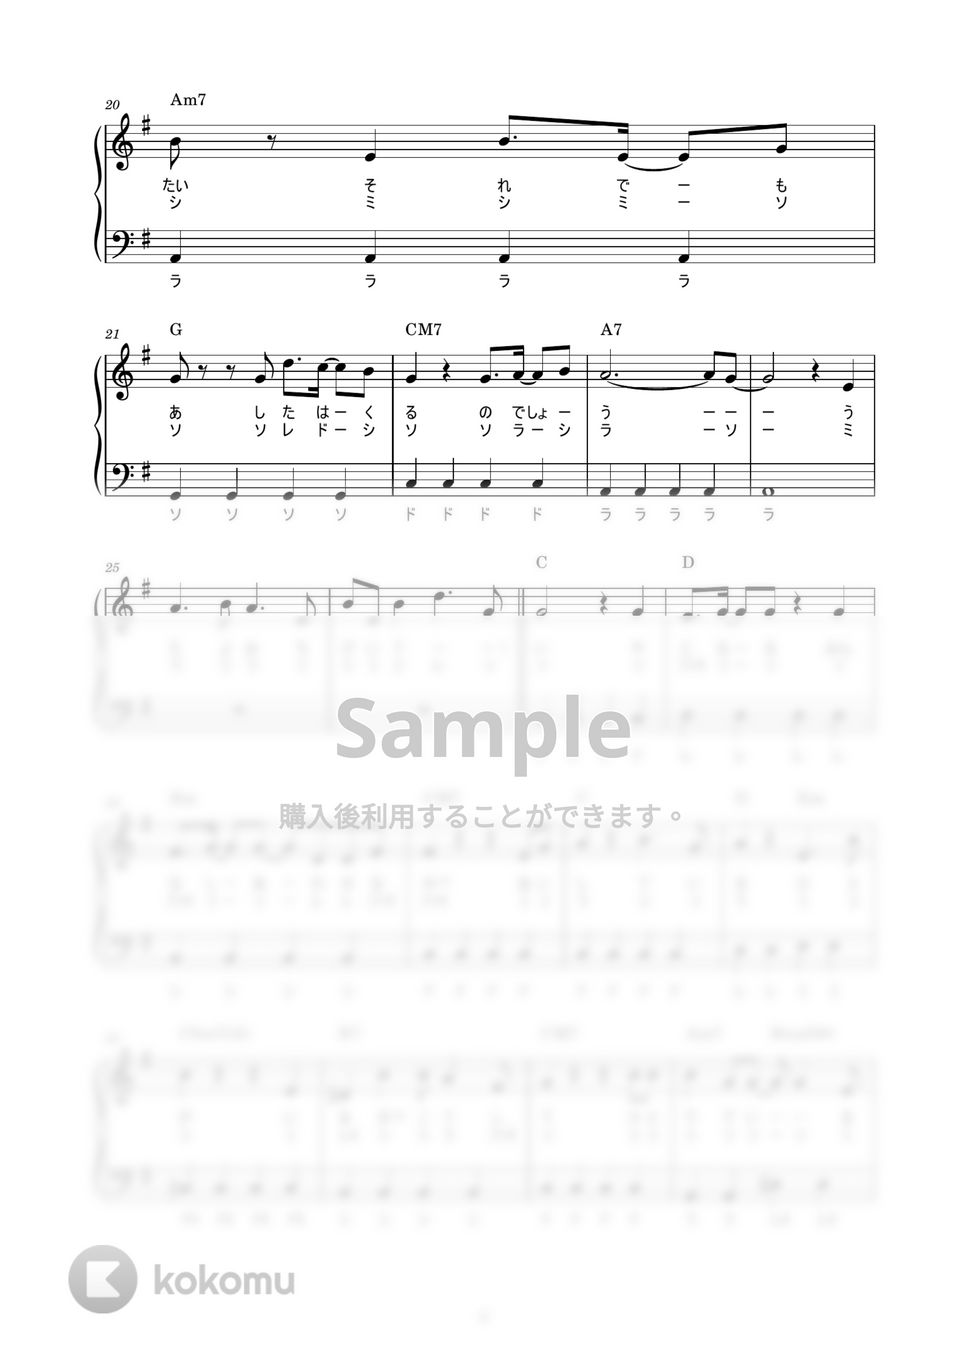 Belle - 歌よ (かんたん / 歌詞付き / ドレミ付き / 初心者) by piano.tokyo